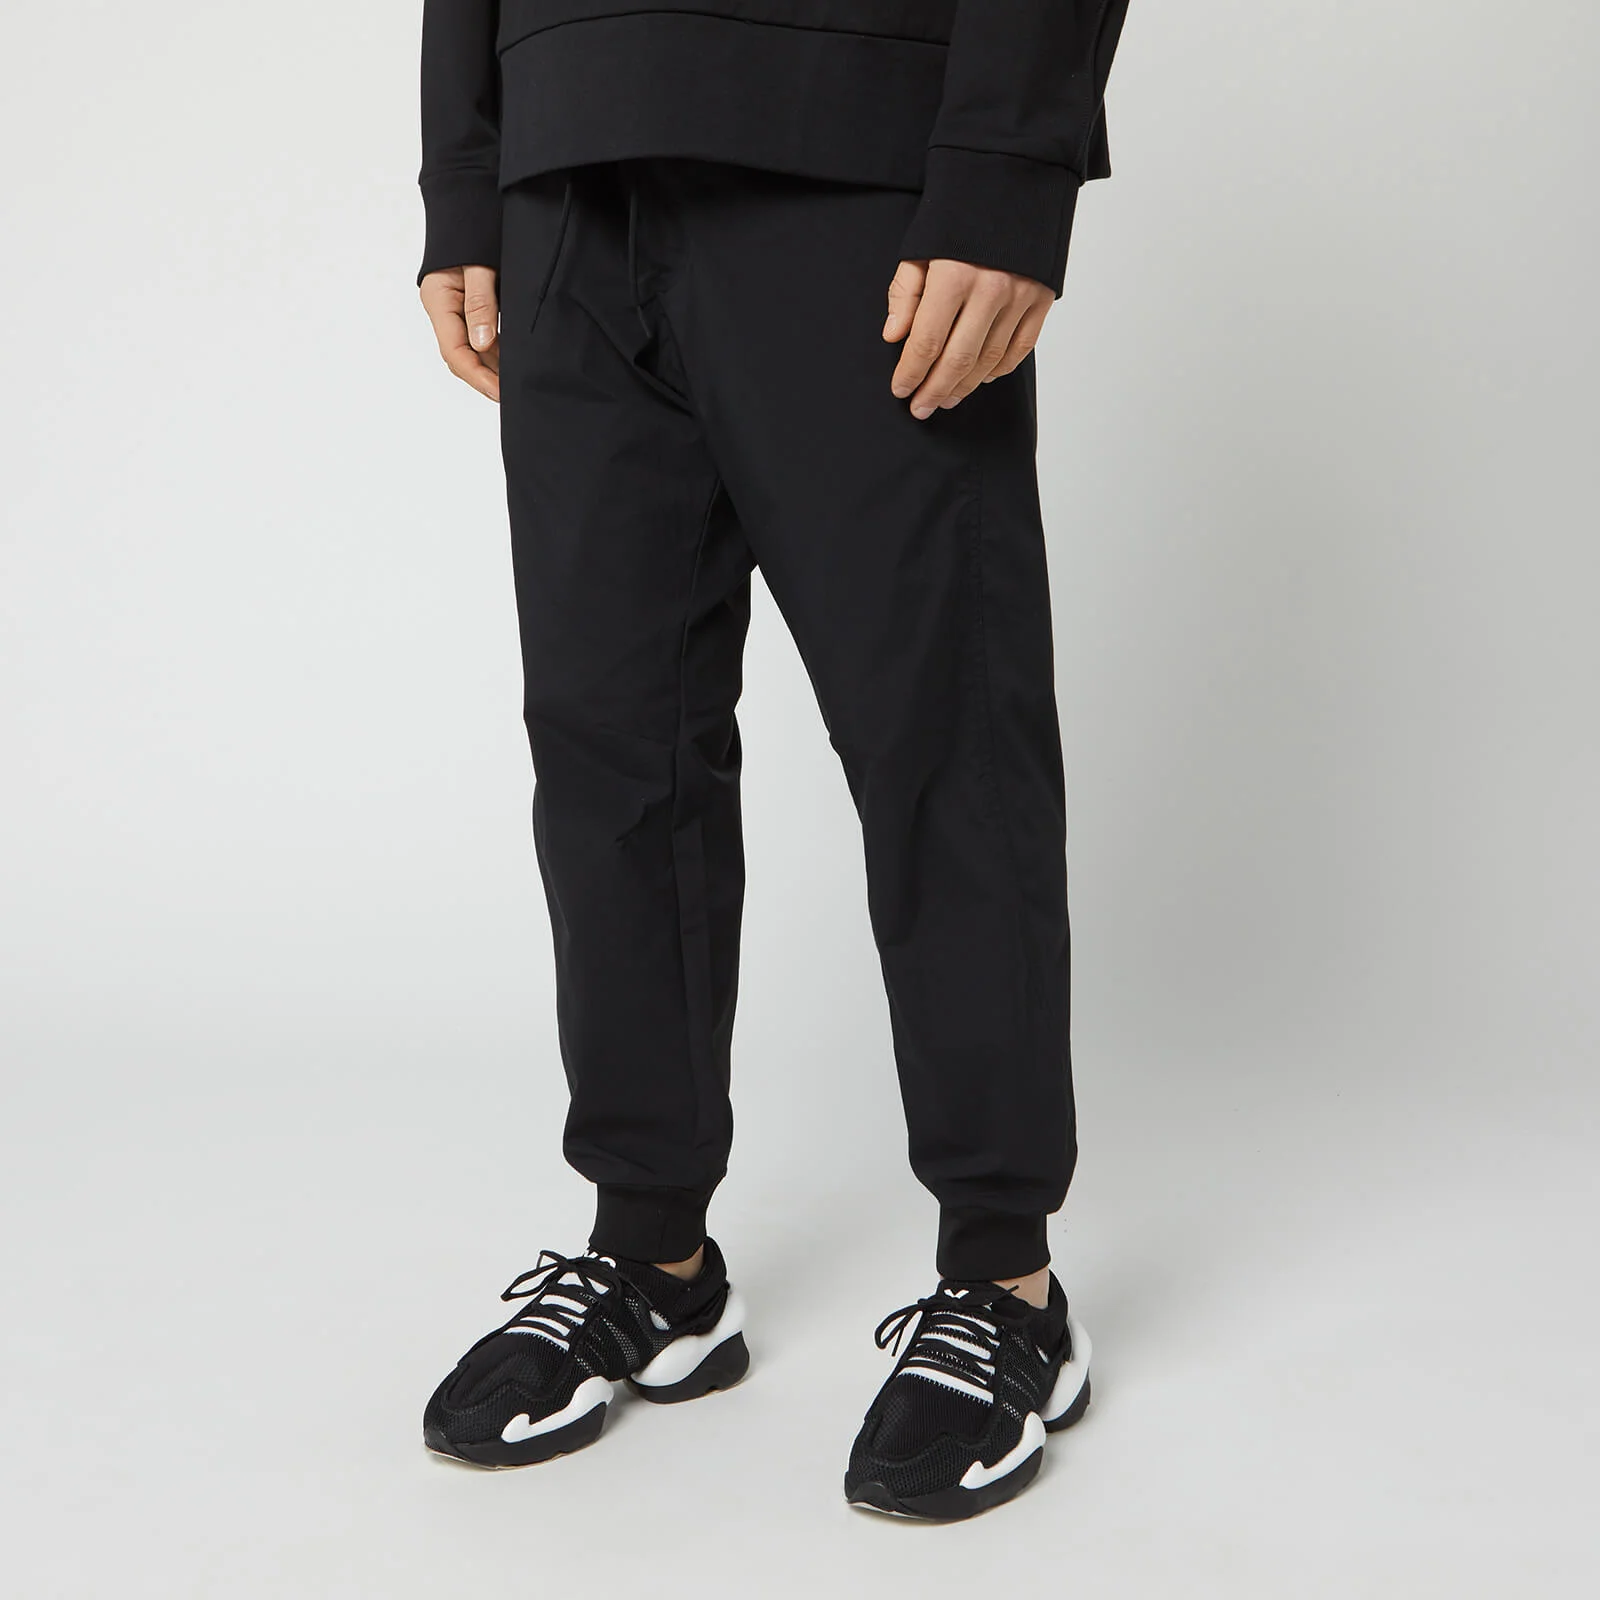 Y-3 Men's Woven Lux Cuff Track Pants - Black Image 1